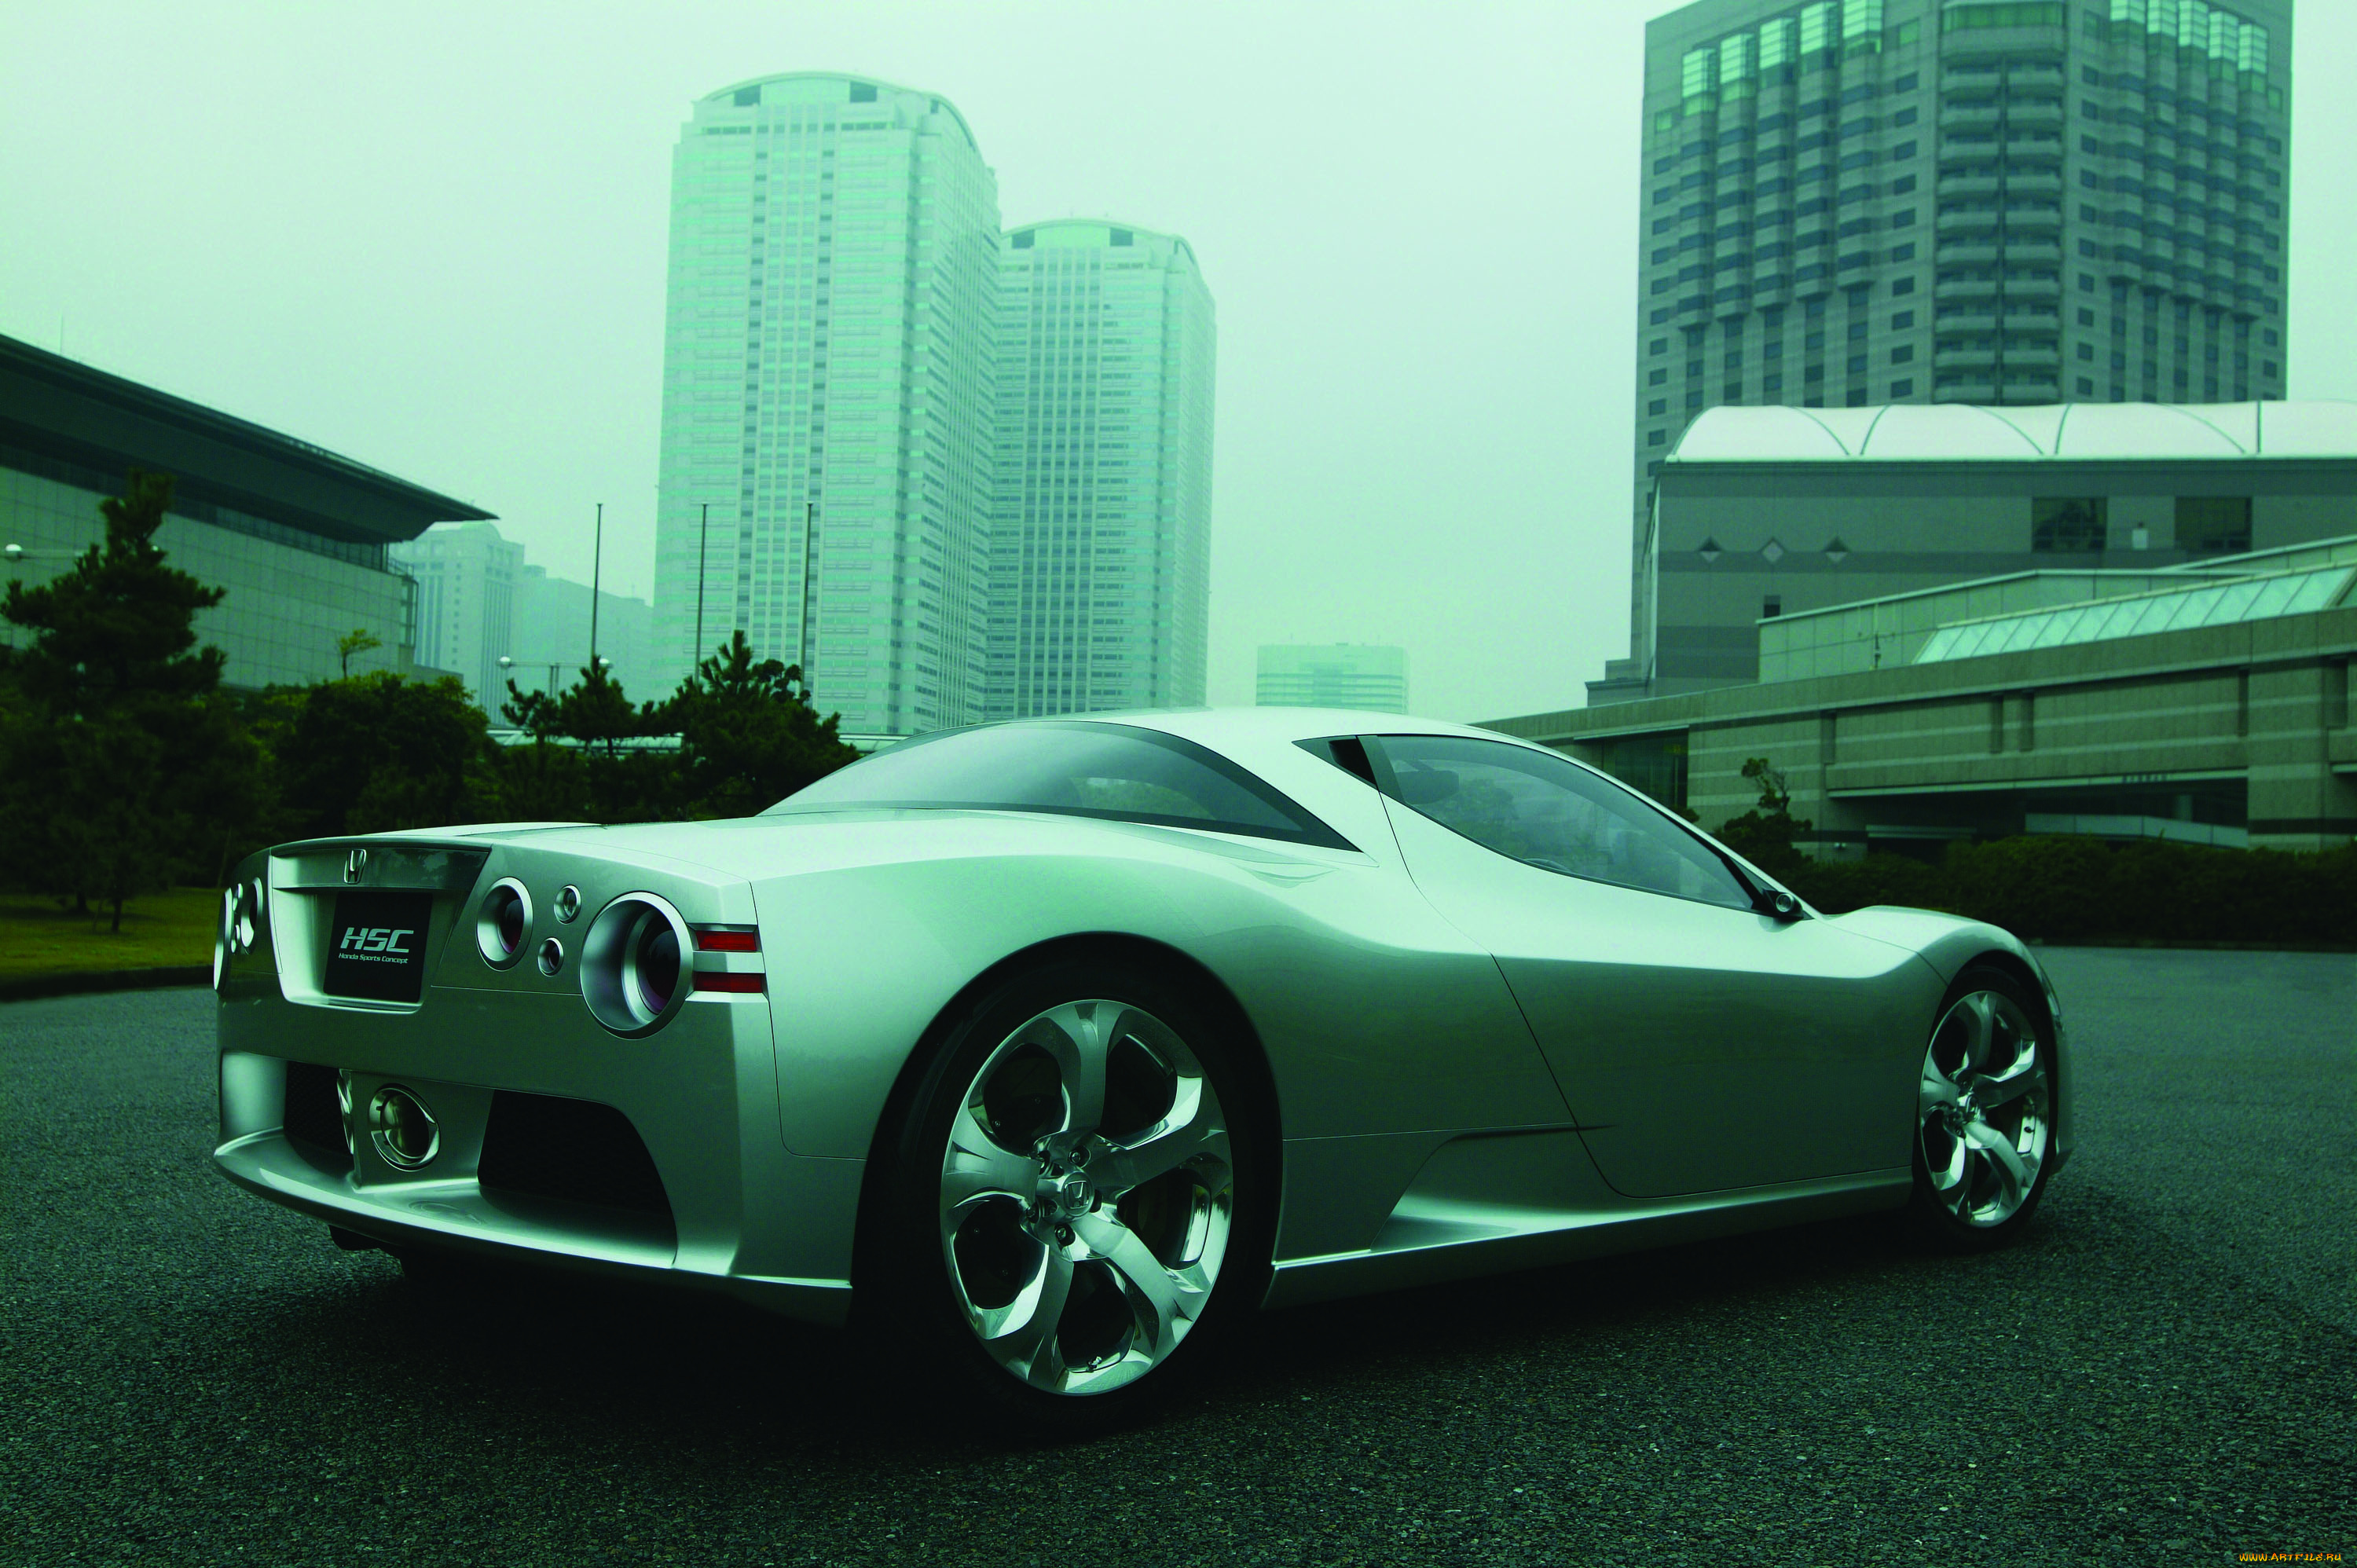 2003-honda-hsc-concept, автомобили, honda